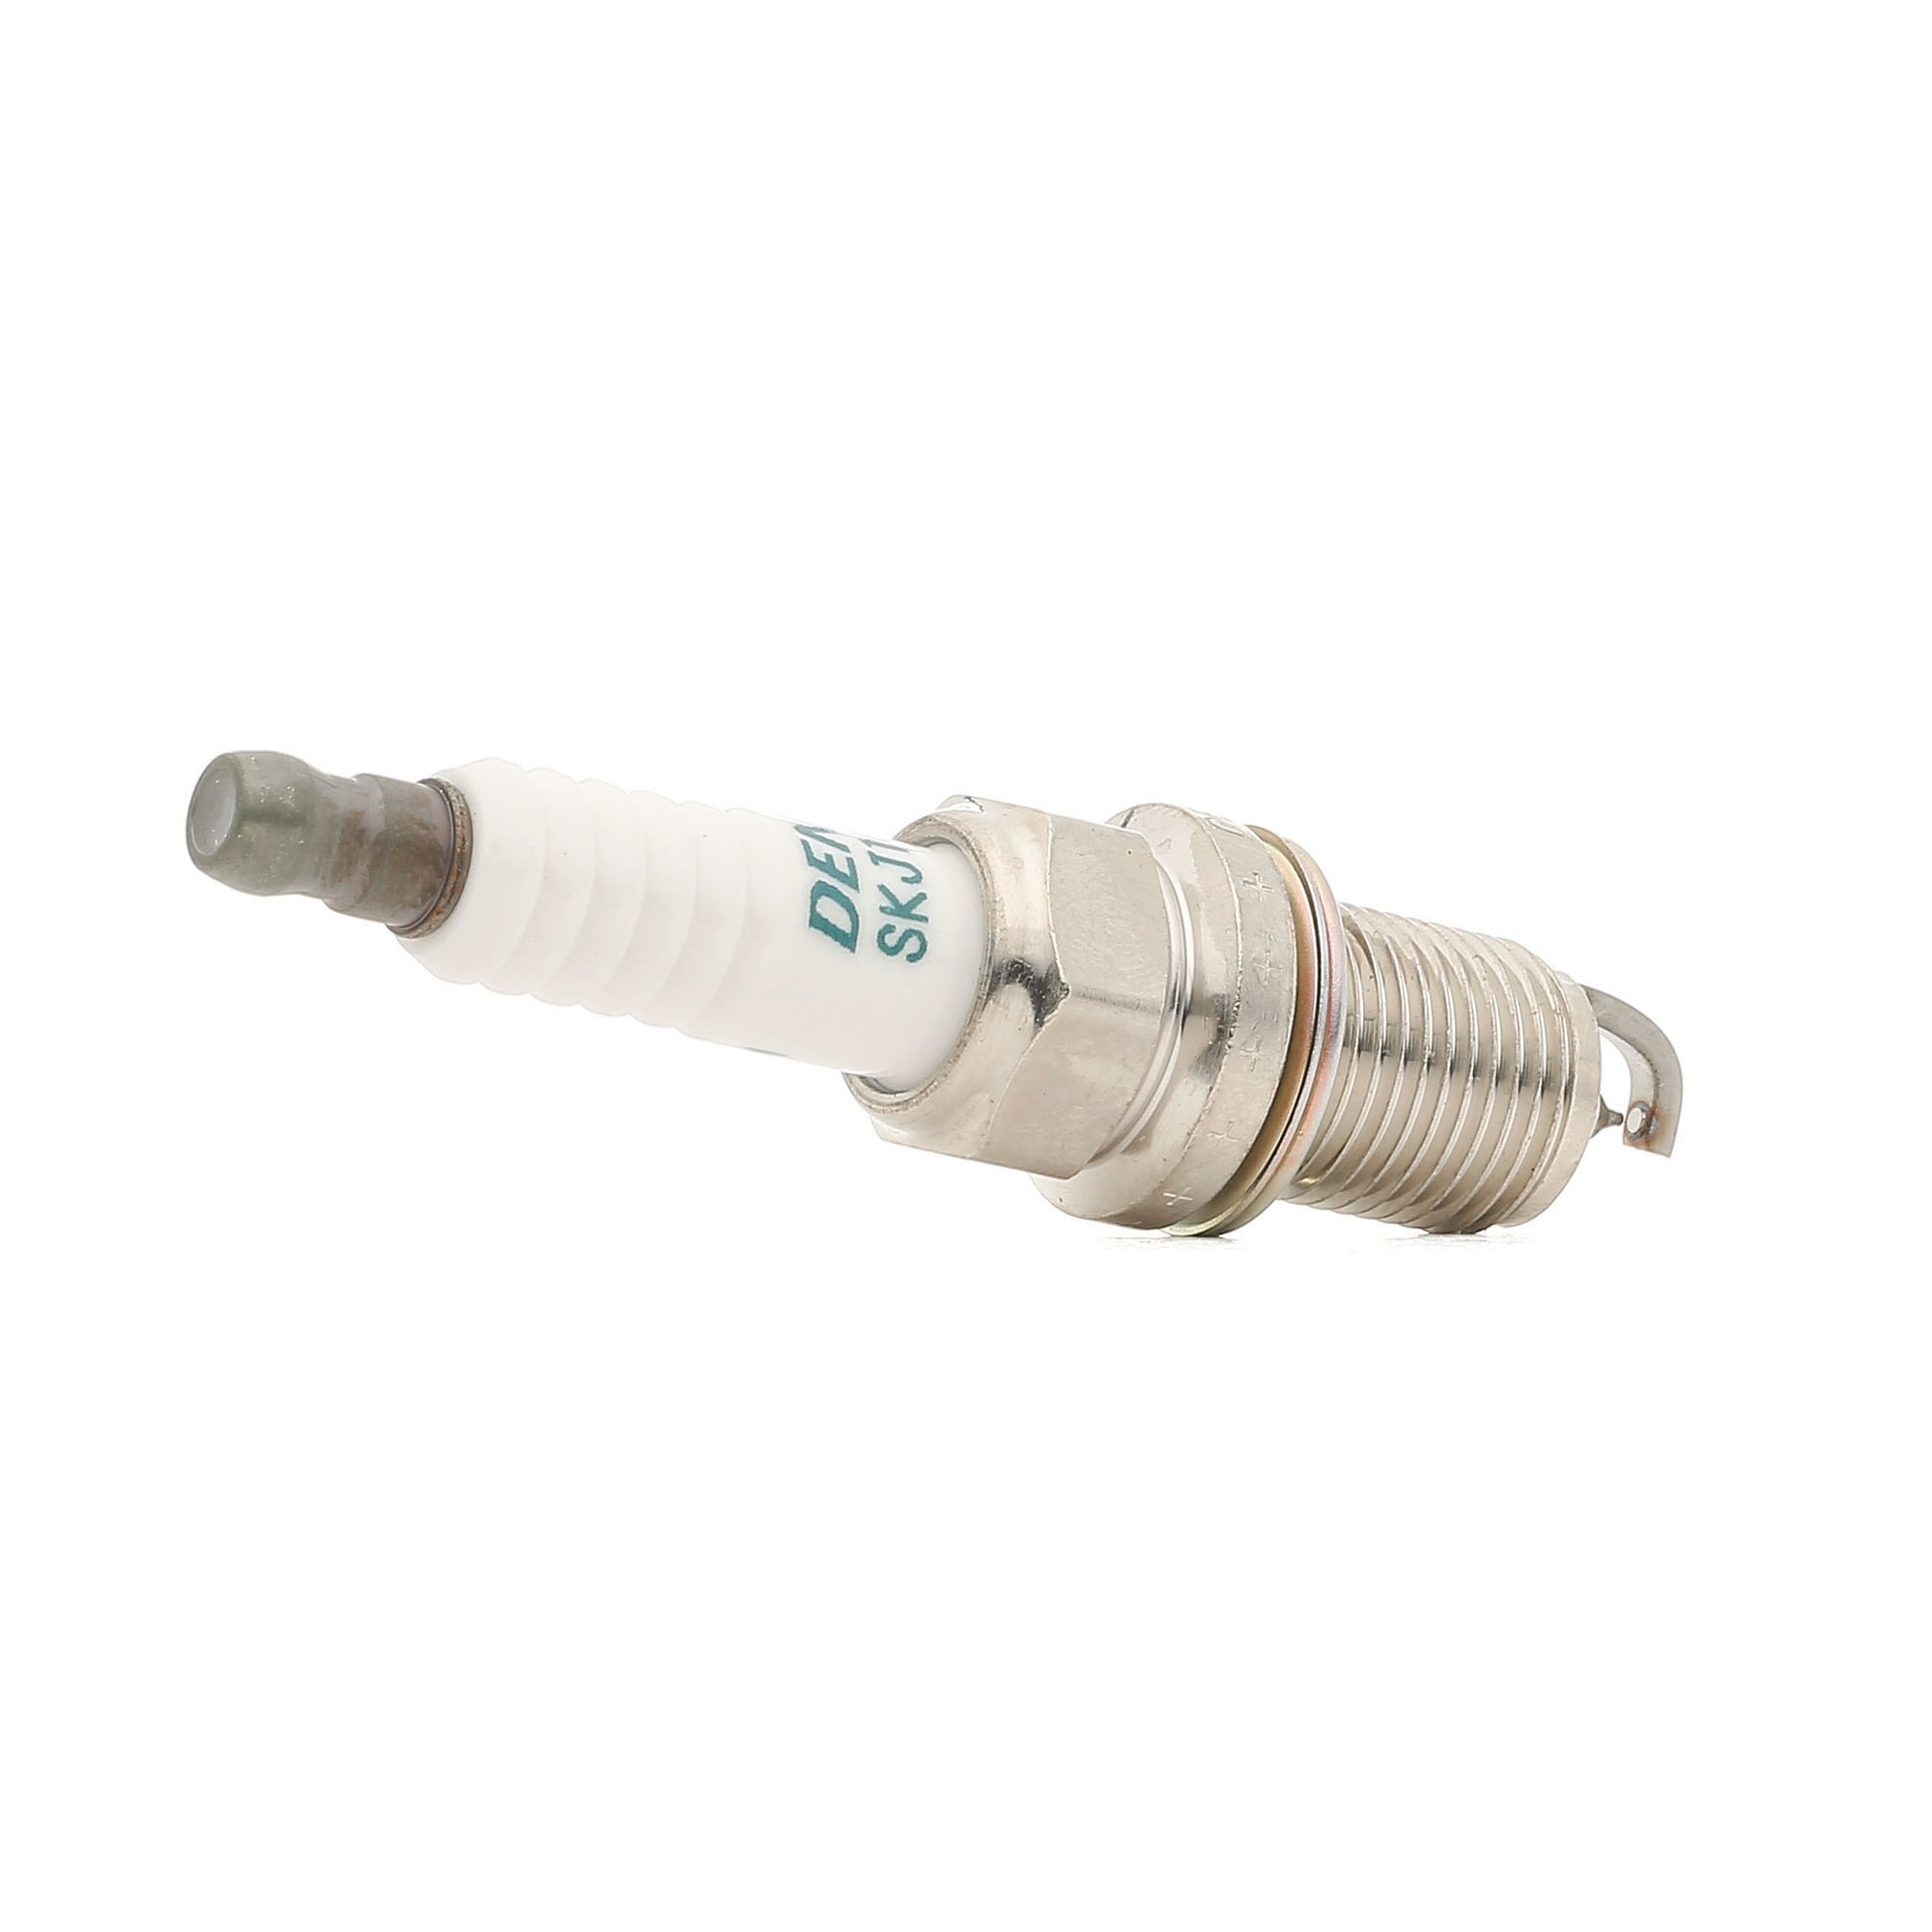 Great value for money - DENSO Spark plug SKJ16CR-A8